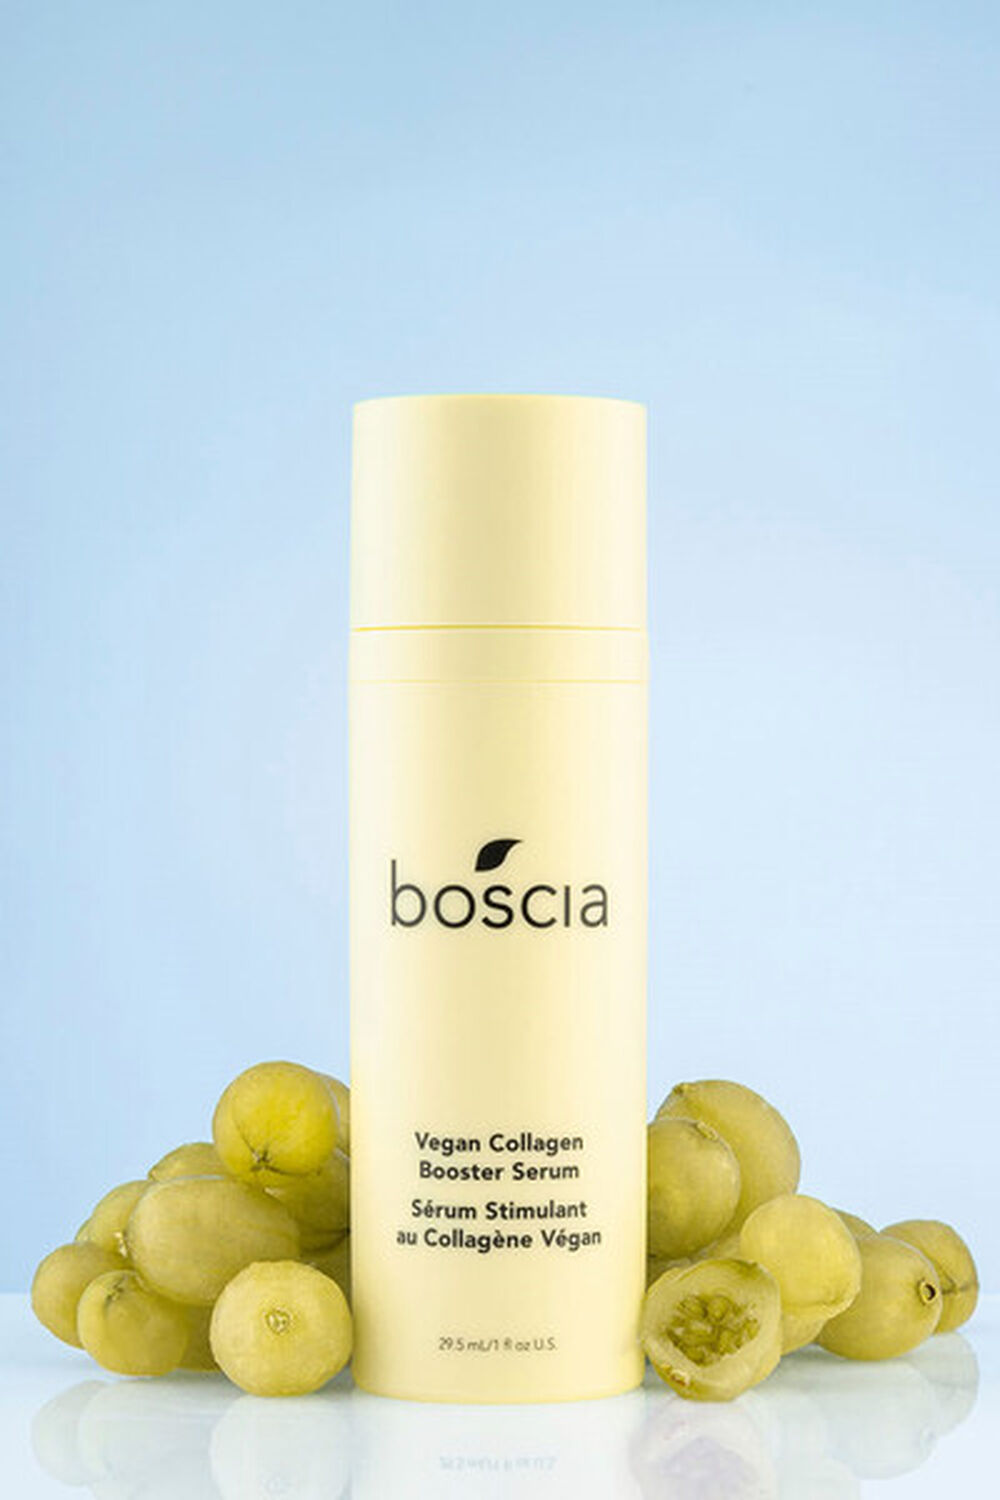 boscia Vegan Collagen Booster Serum, image 3